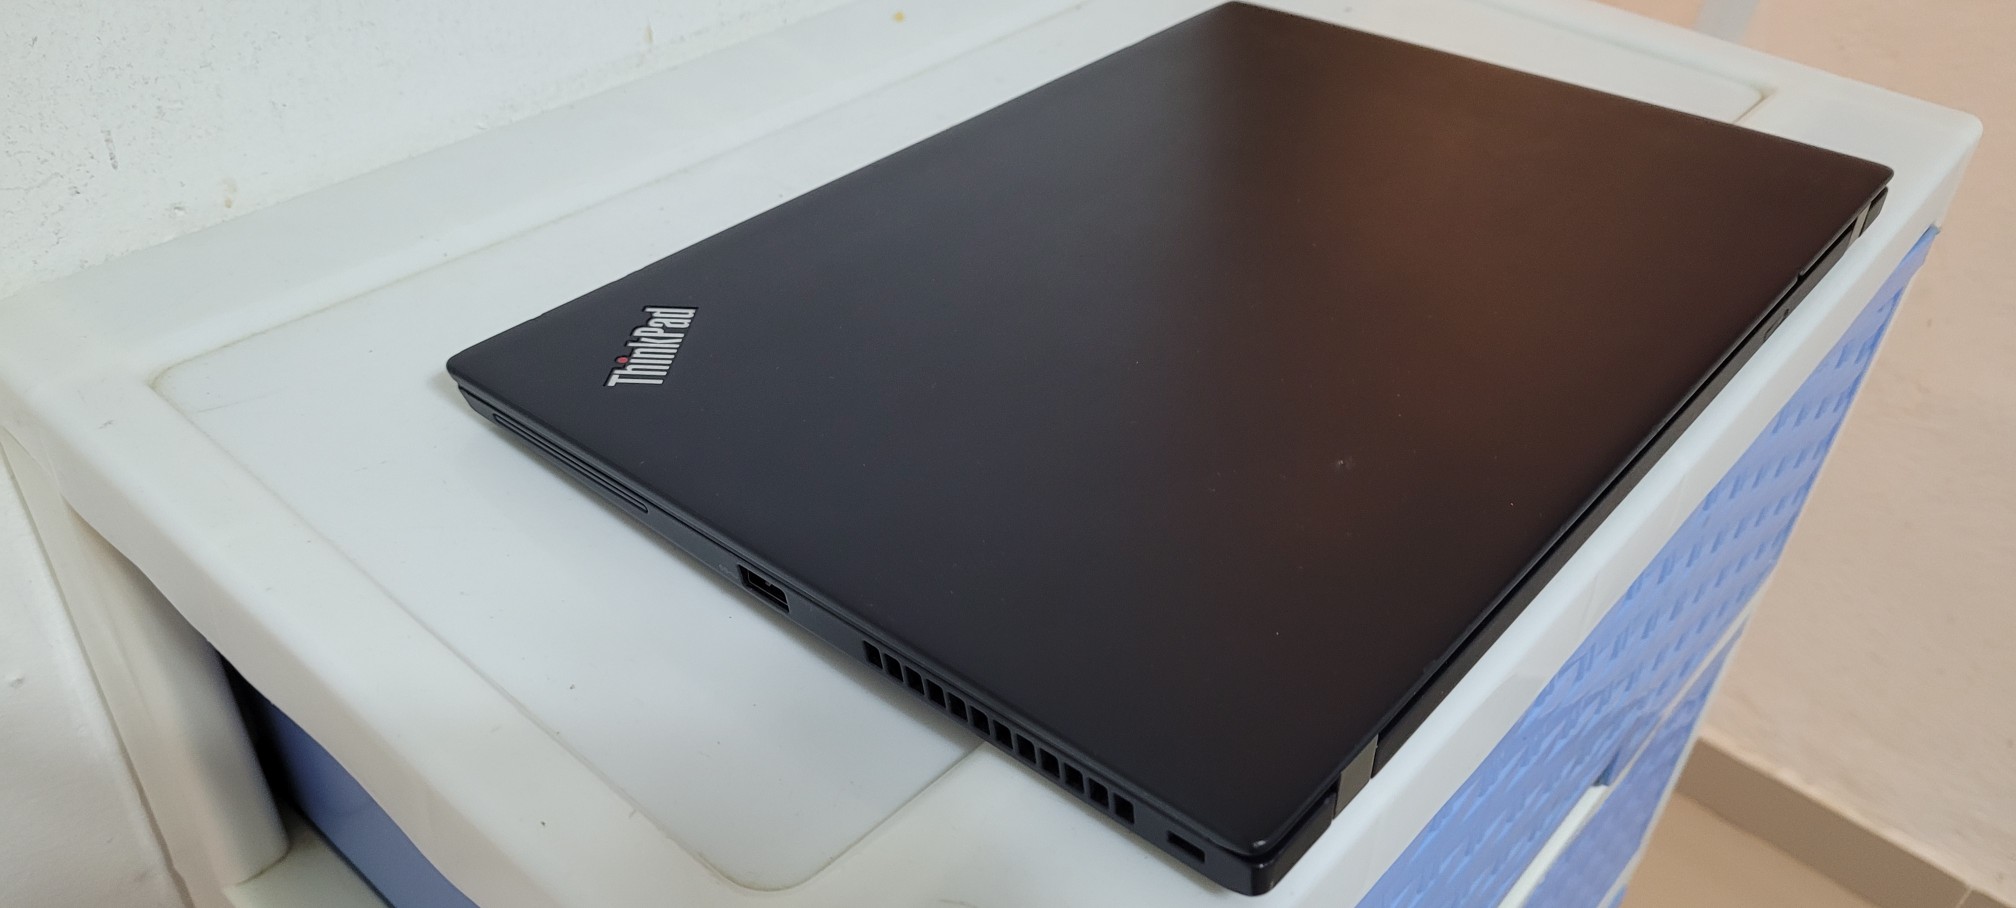 computadoras y laptops - Lenovo Slim T460 14 Pulg Core i5 Ram 8gb ddr4 Disco 256gb SSD WIFI BLUETOTH 2